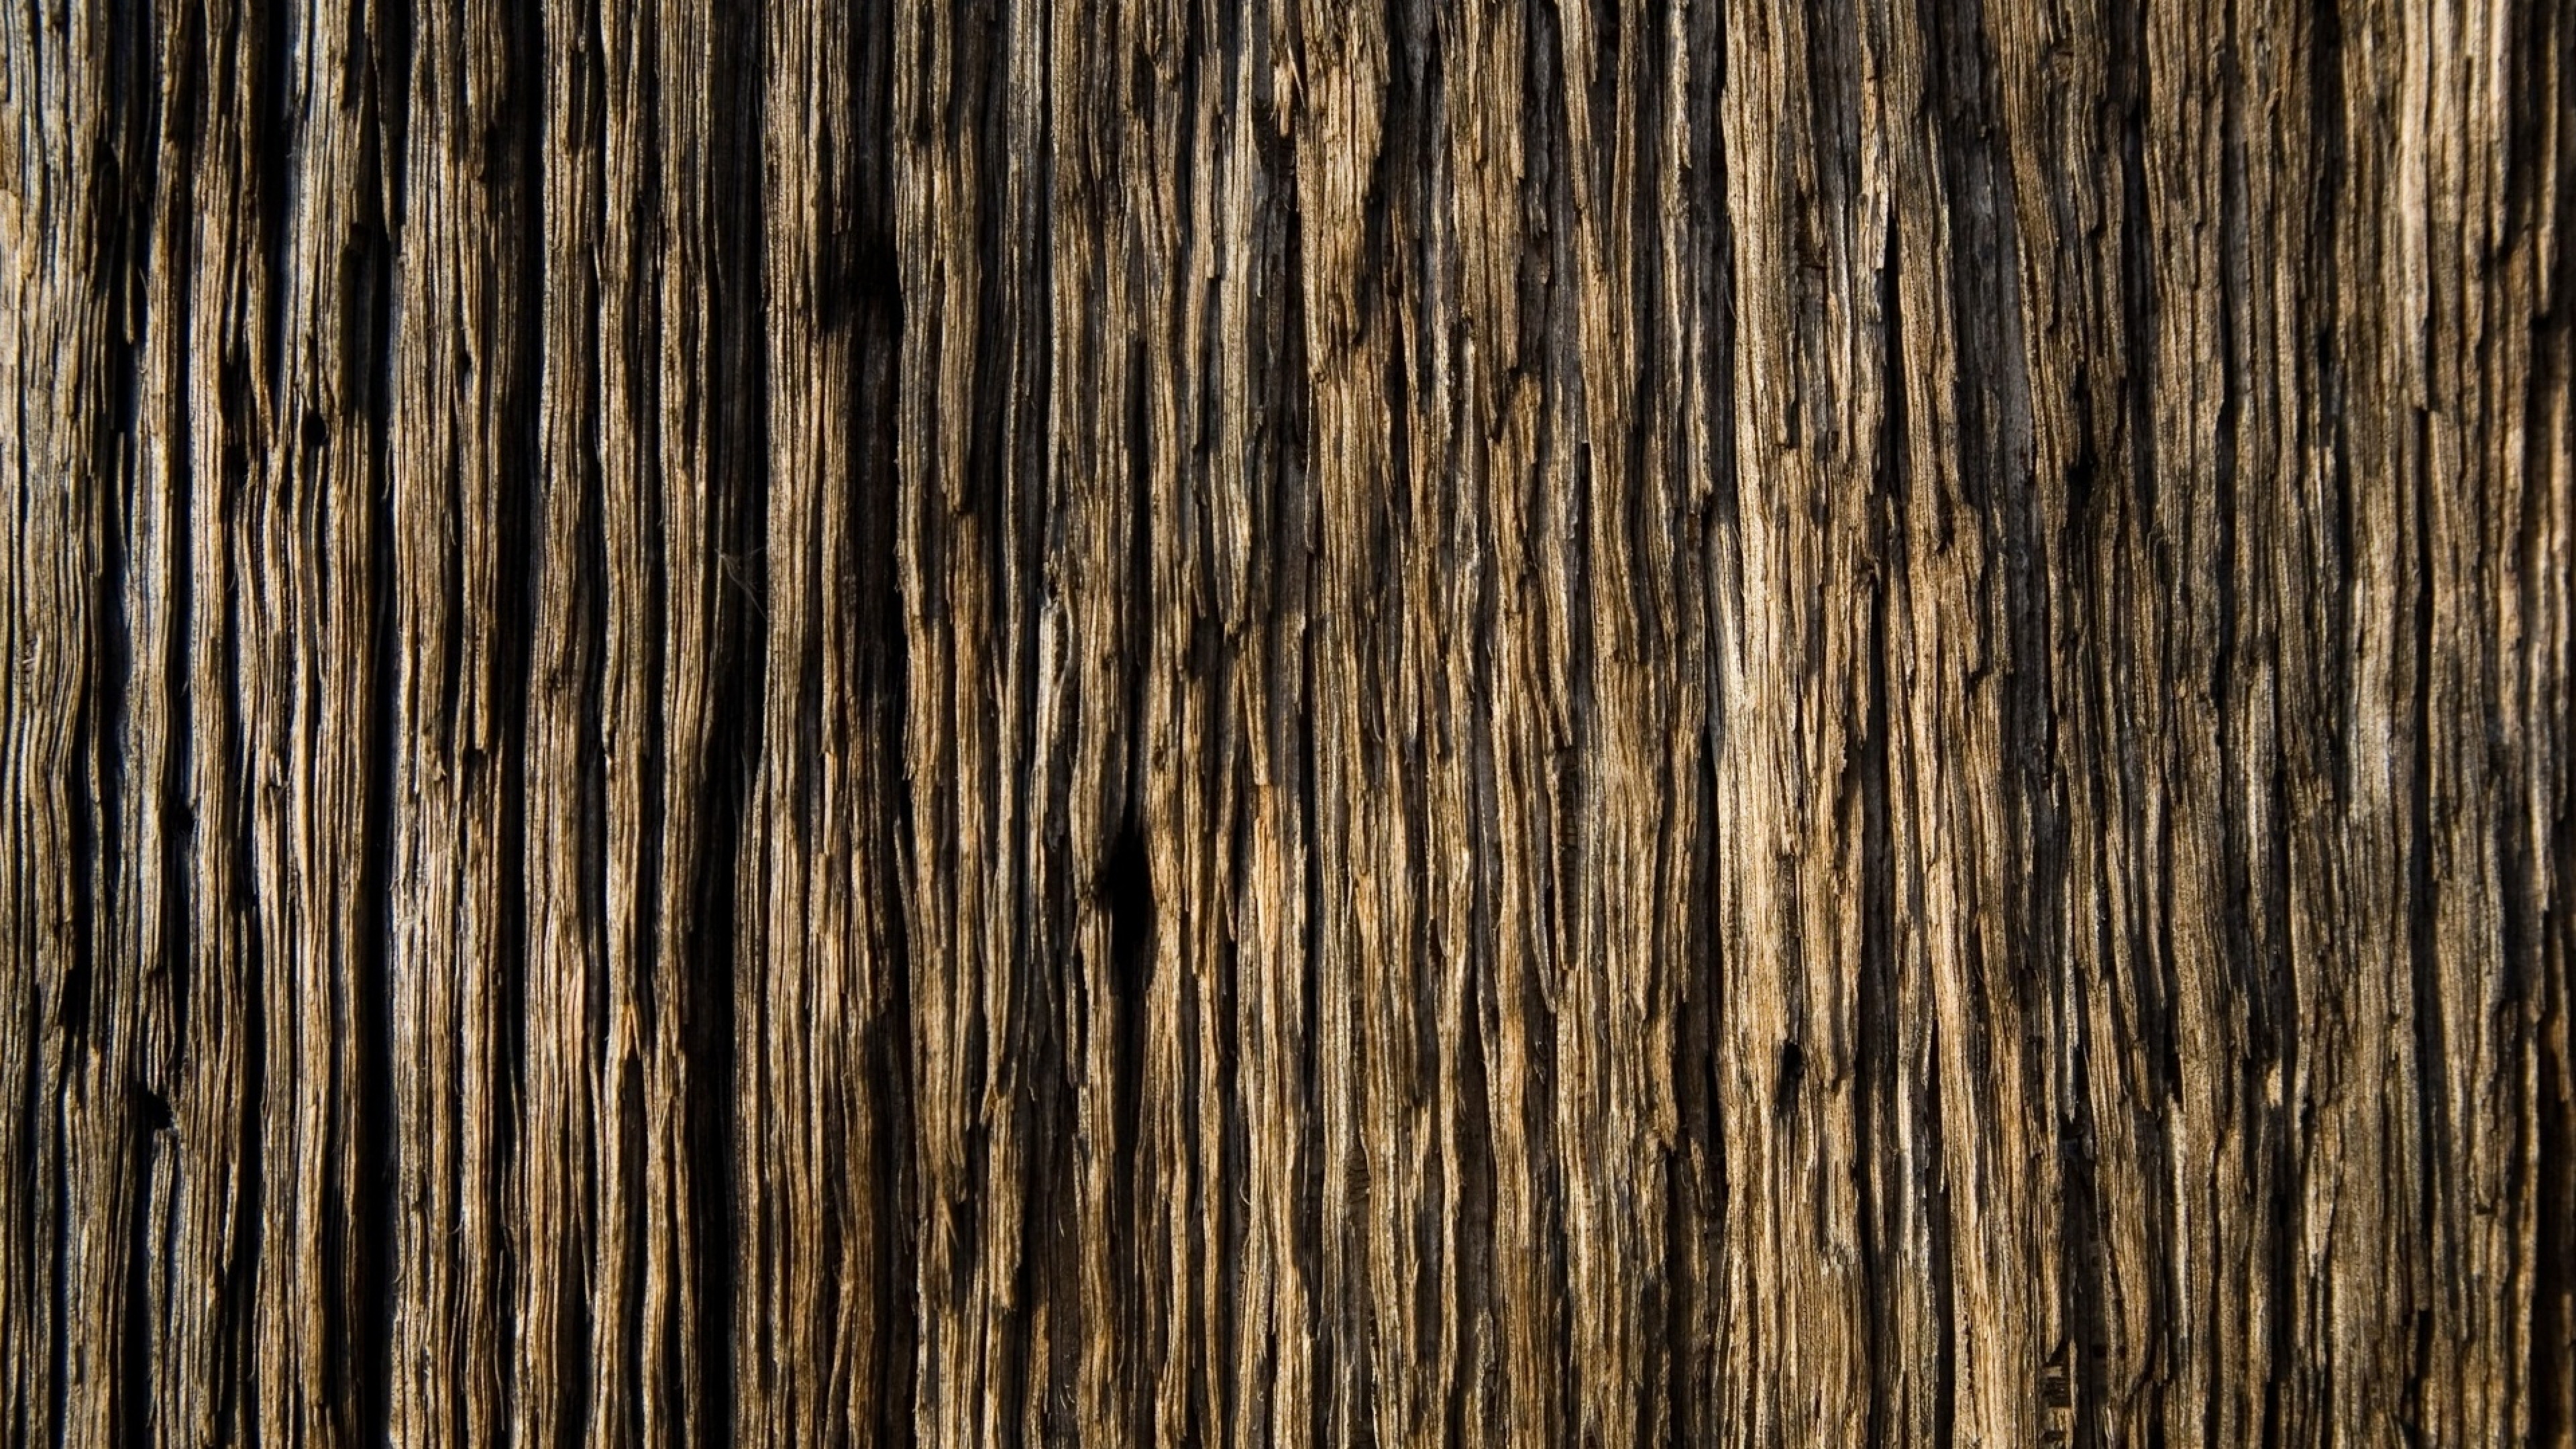 Download Tree Bark Texture Widescreen Wallpaper 49759 3840x2160 px ...